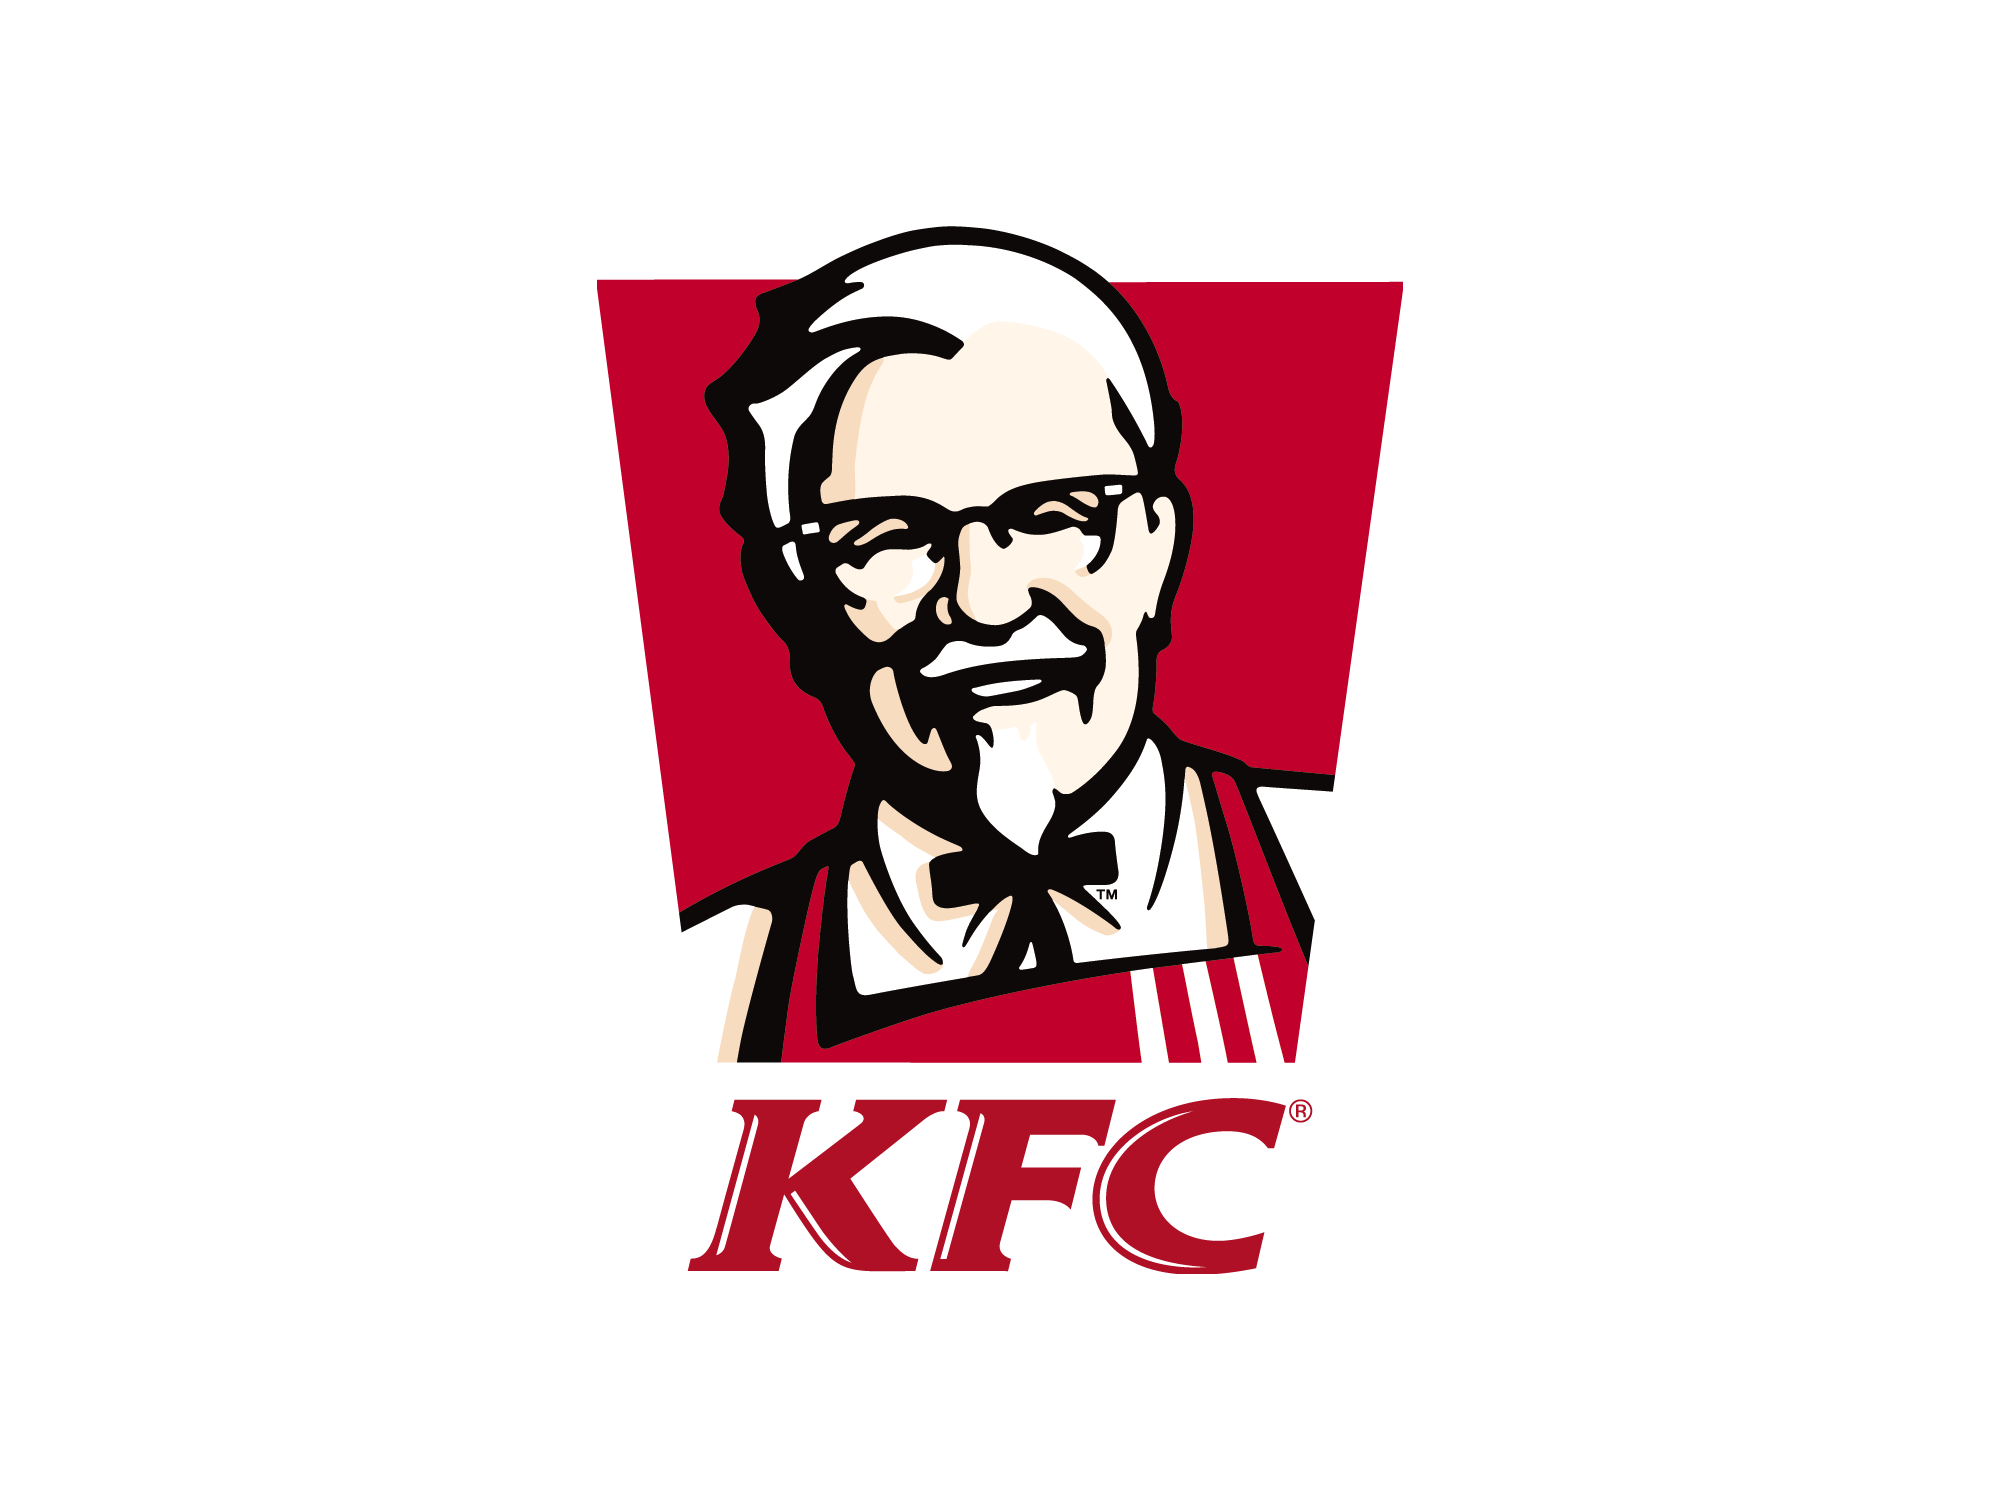 KFC-logo-design-png.png